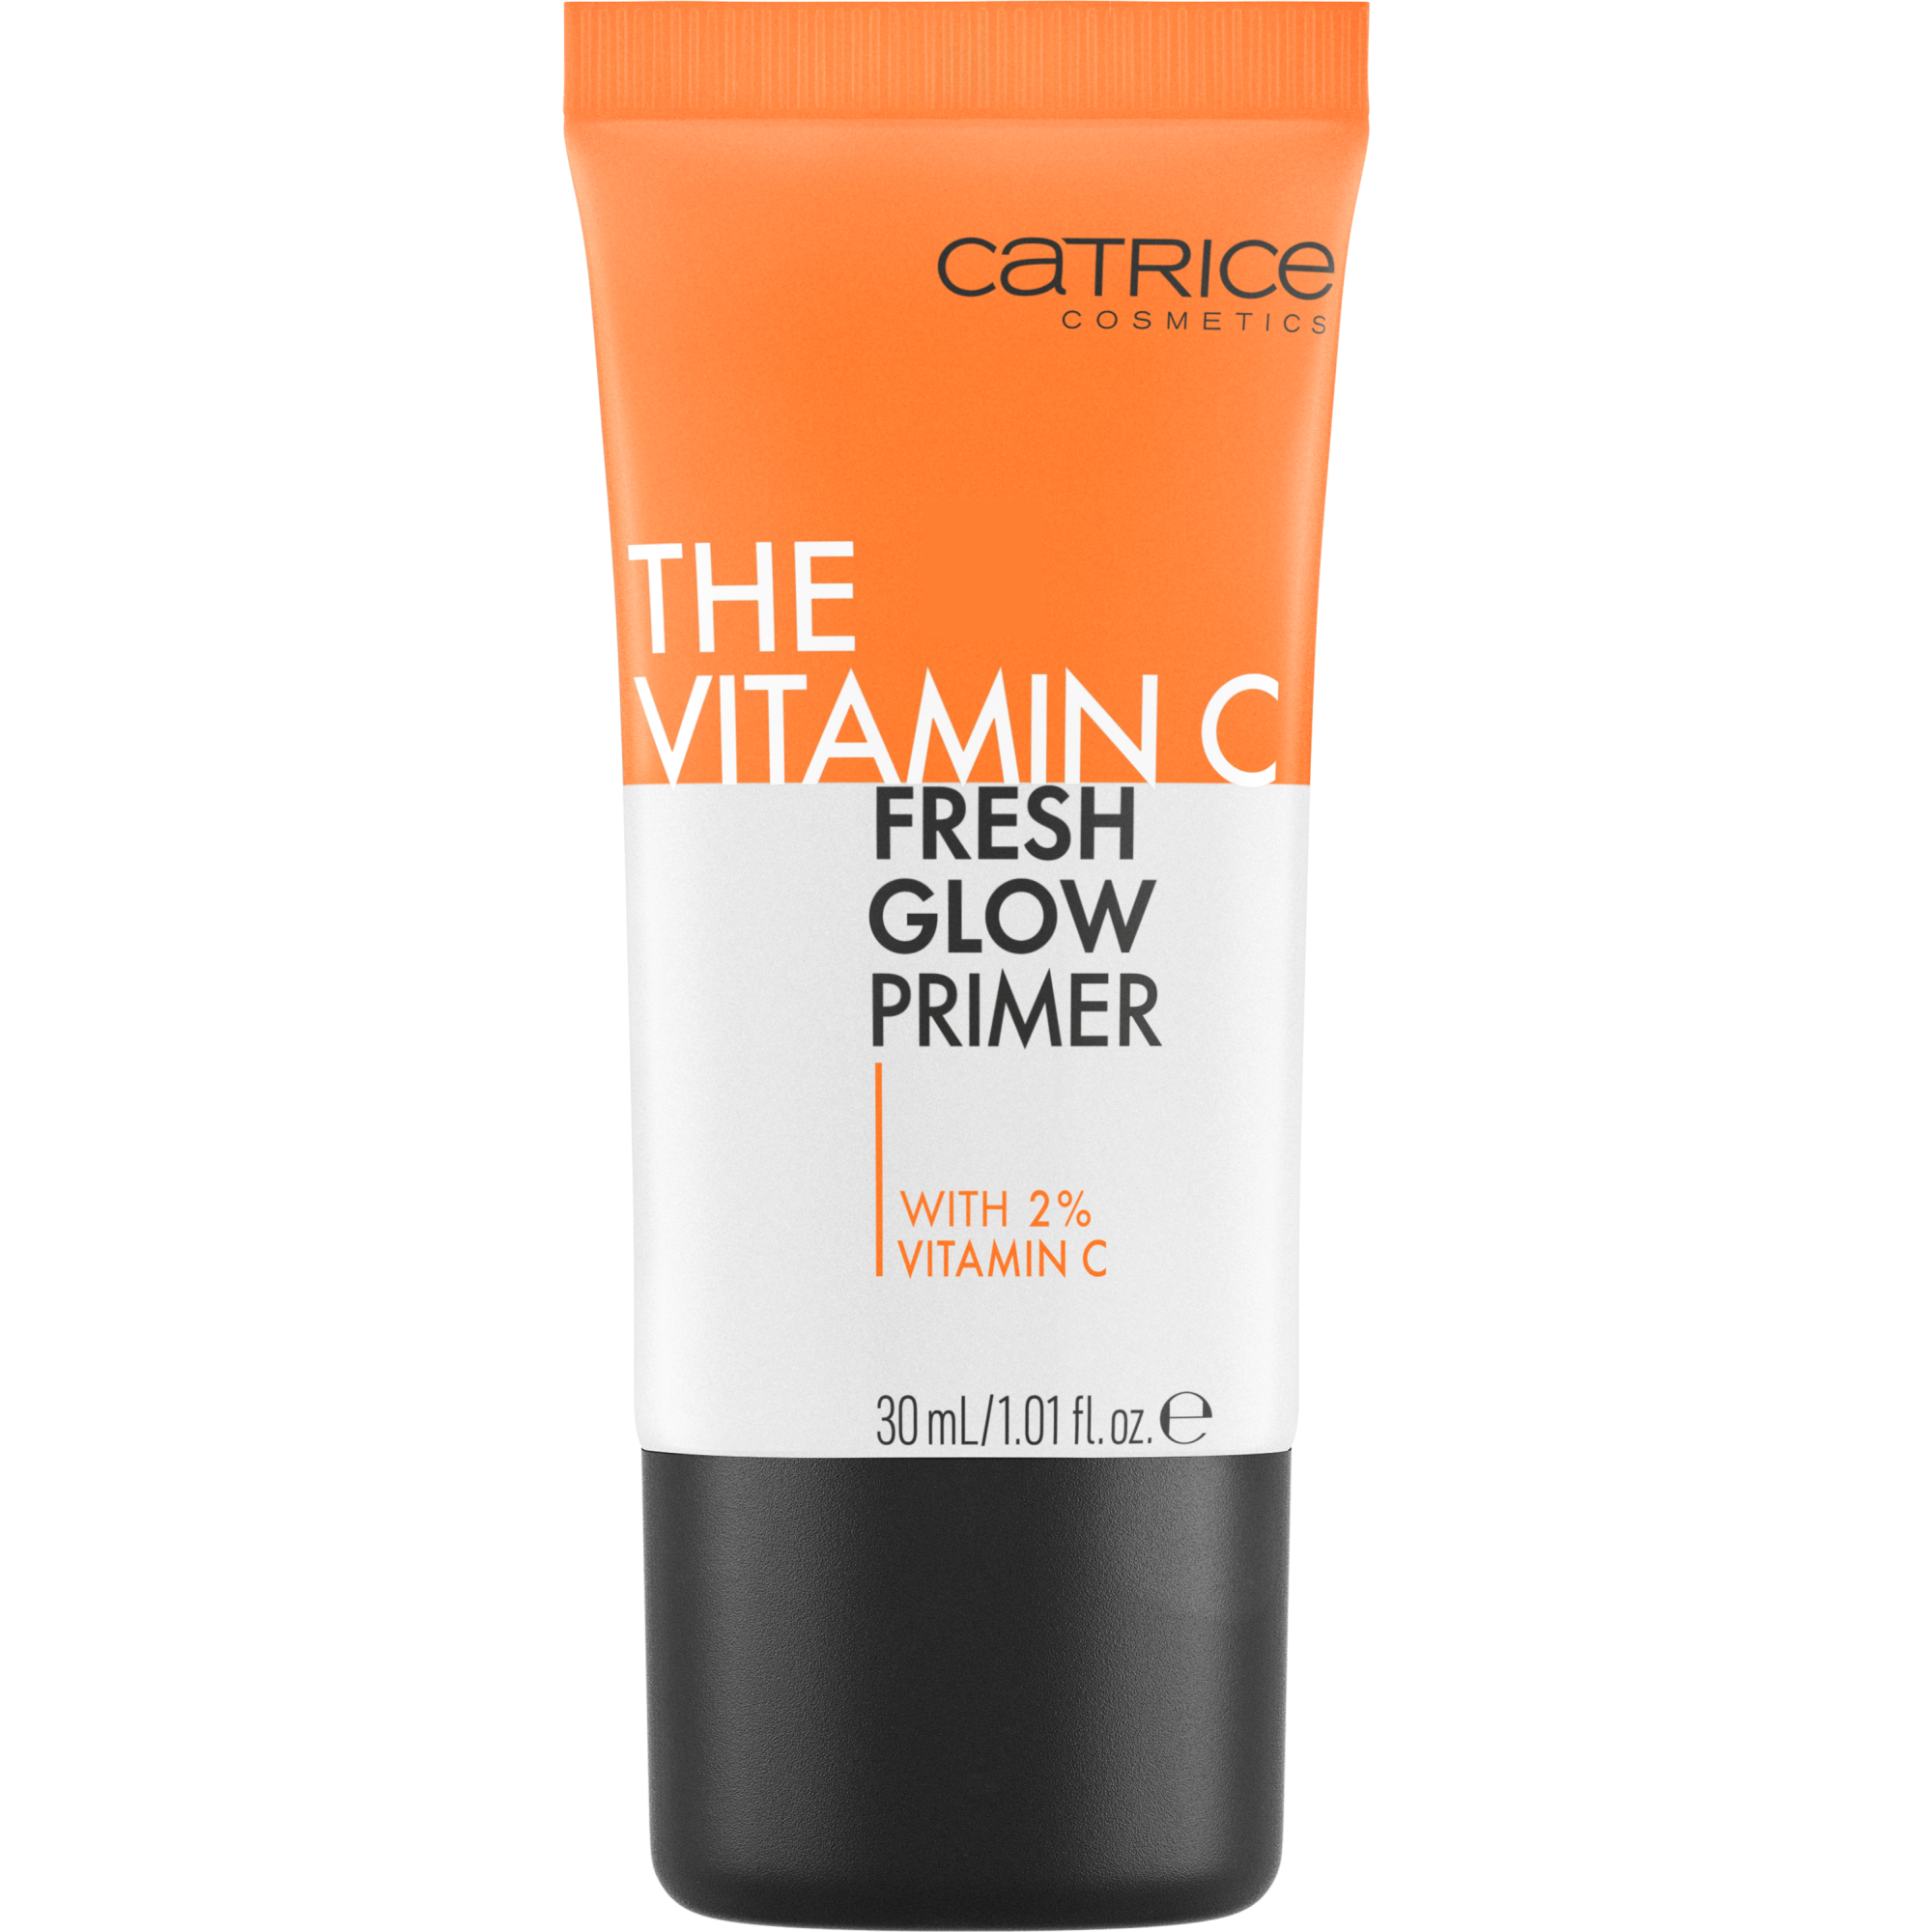 The Vitamin C Fresh Glow Primer